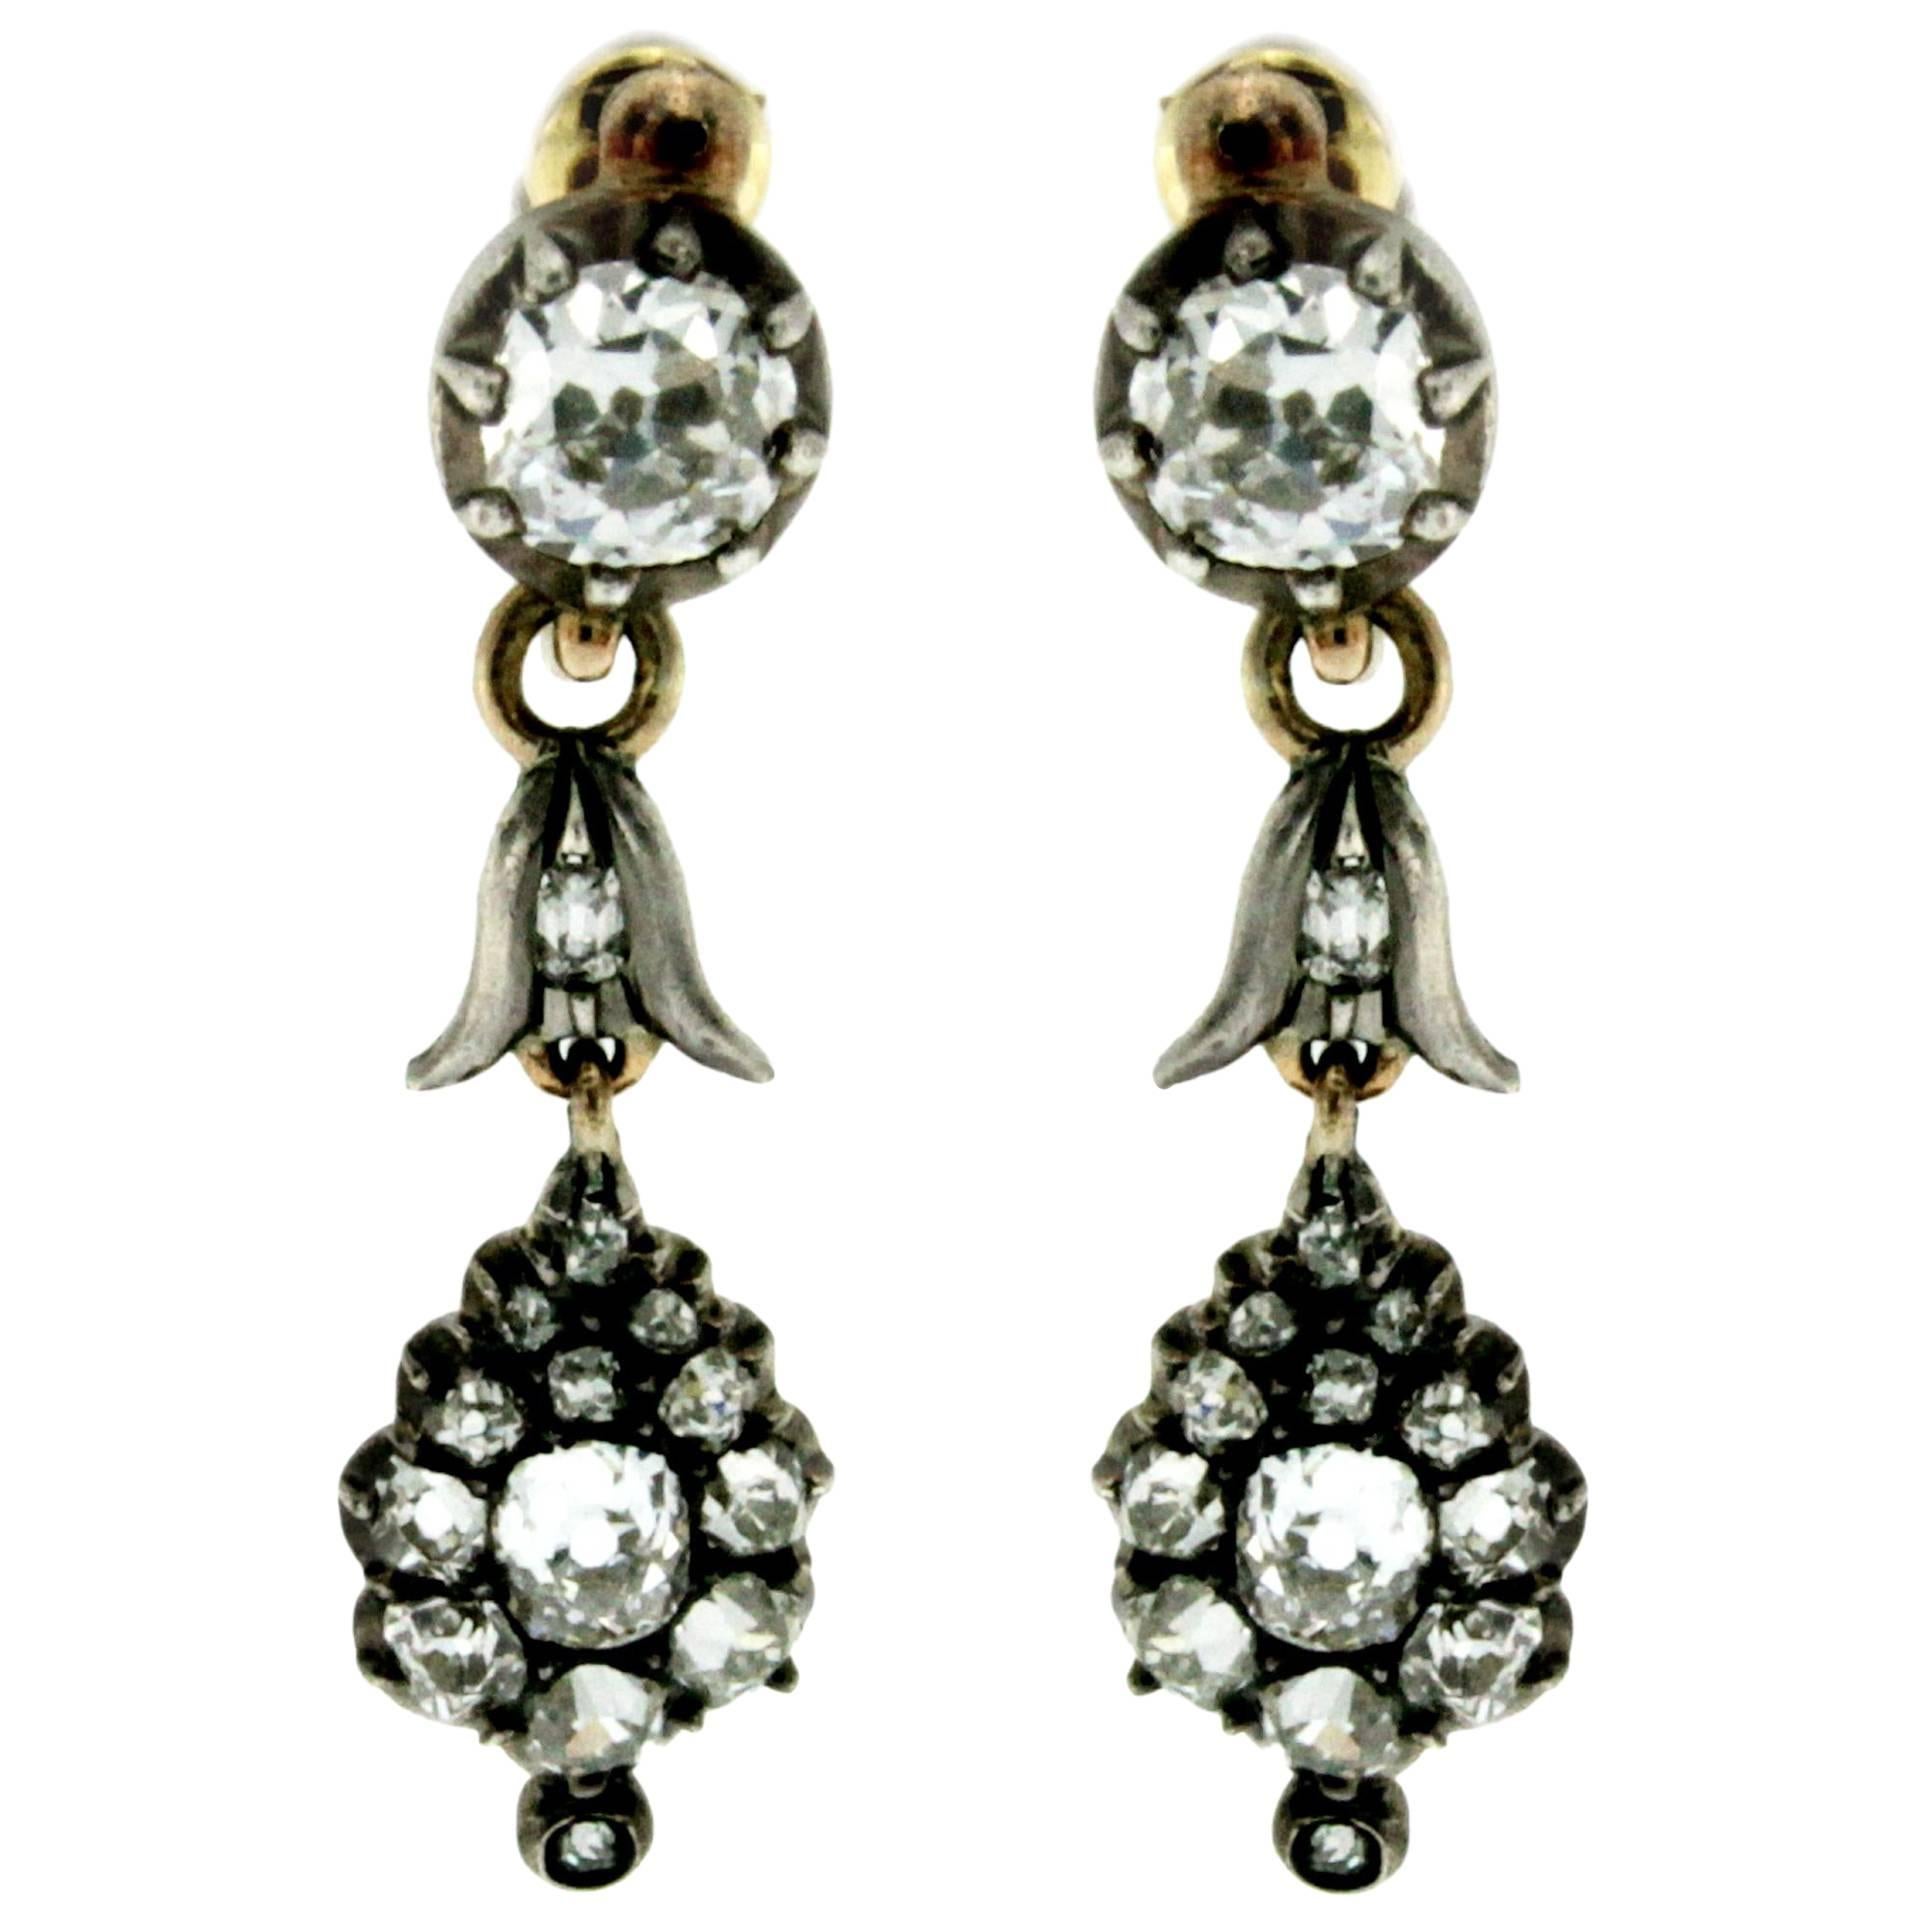 Victorian 3 Carat Diamond Gold Drop Earrings